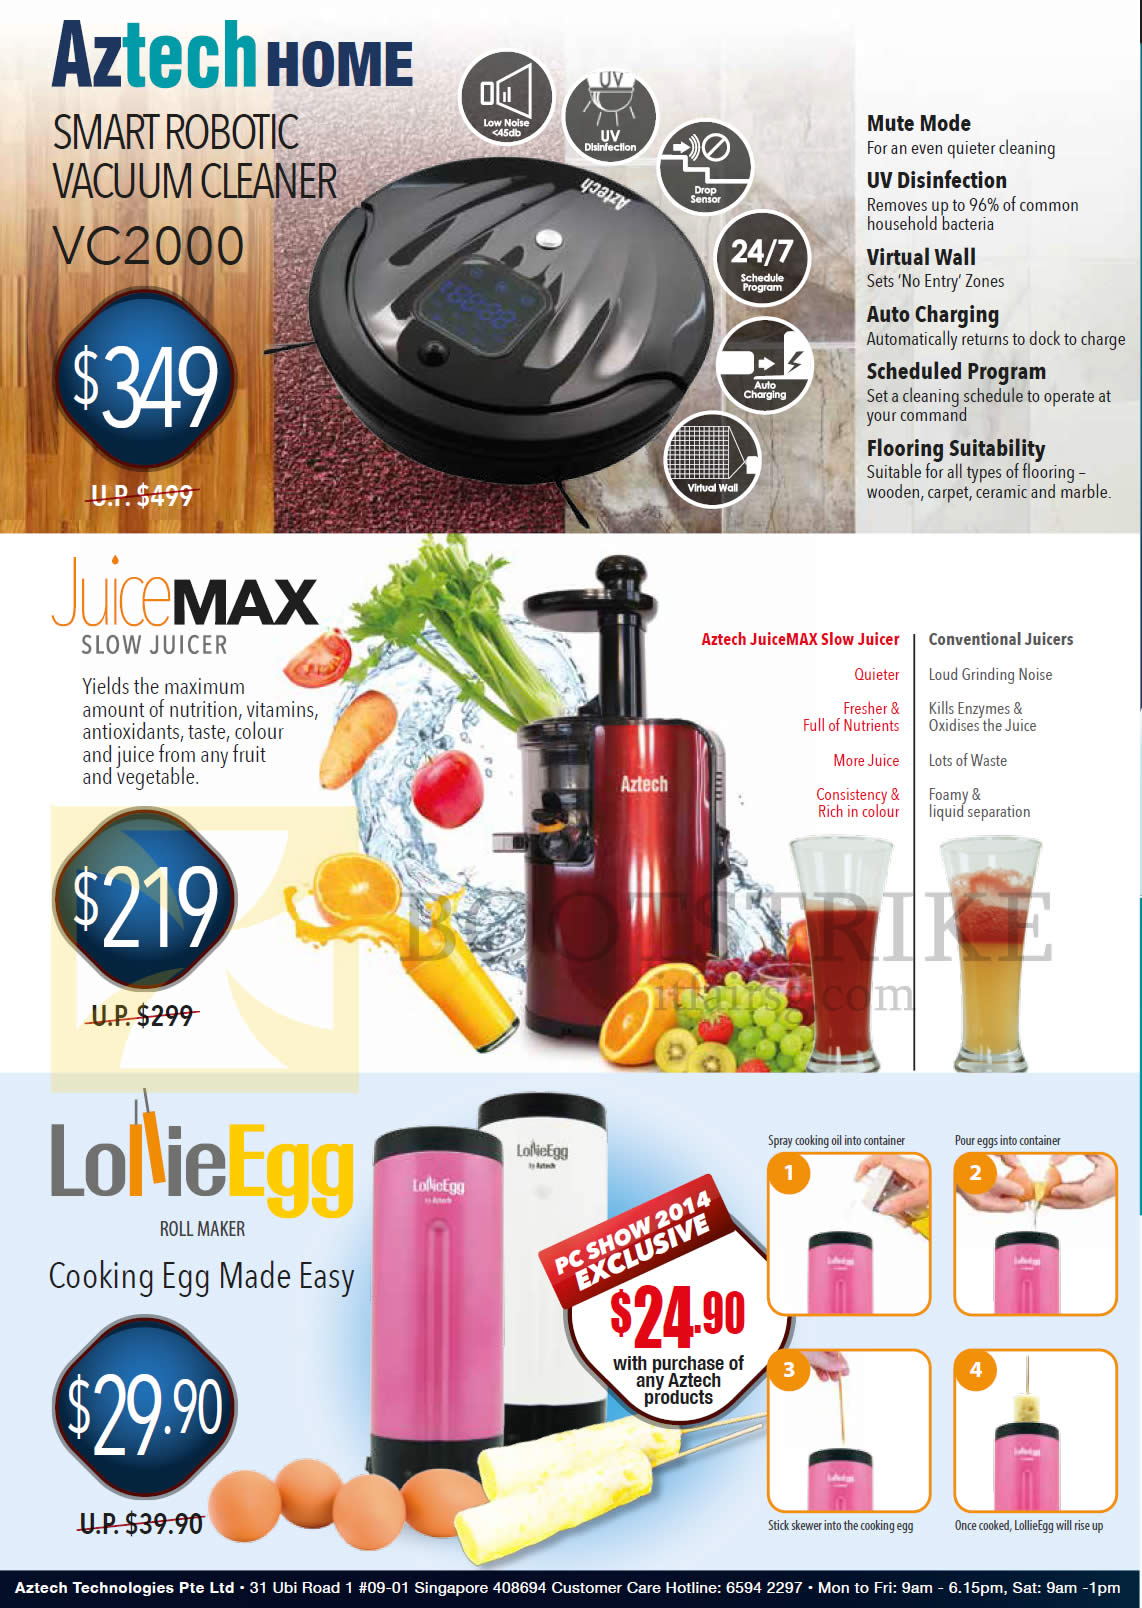 PC SHOW 2014 price list image brochure of Aztech VC2000 Vacuum Cleaner, JuiceMax Juicer, Lollie Egg Roll Maker